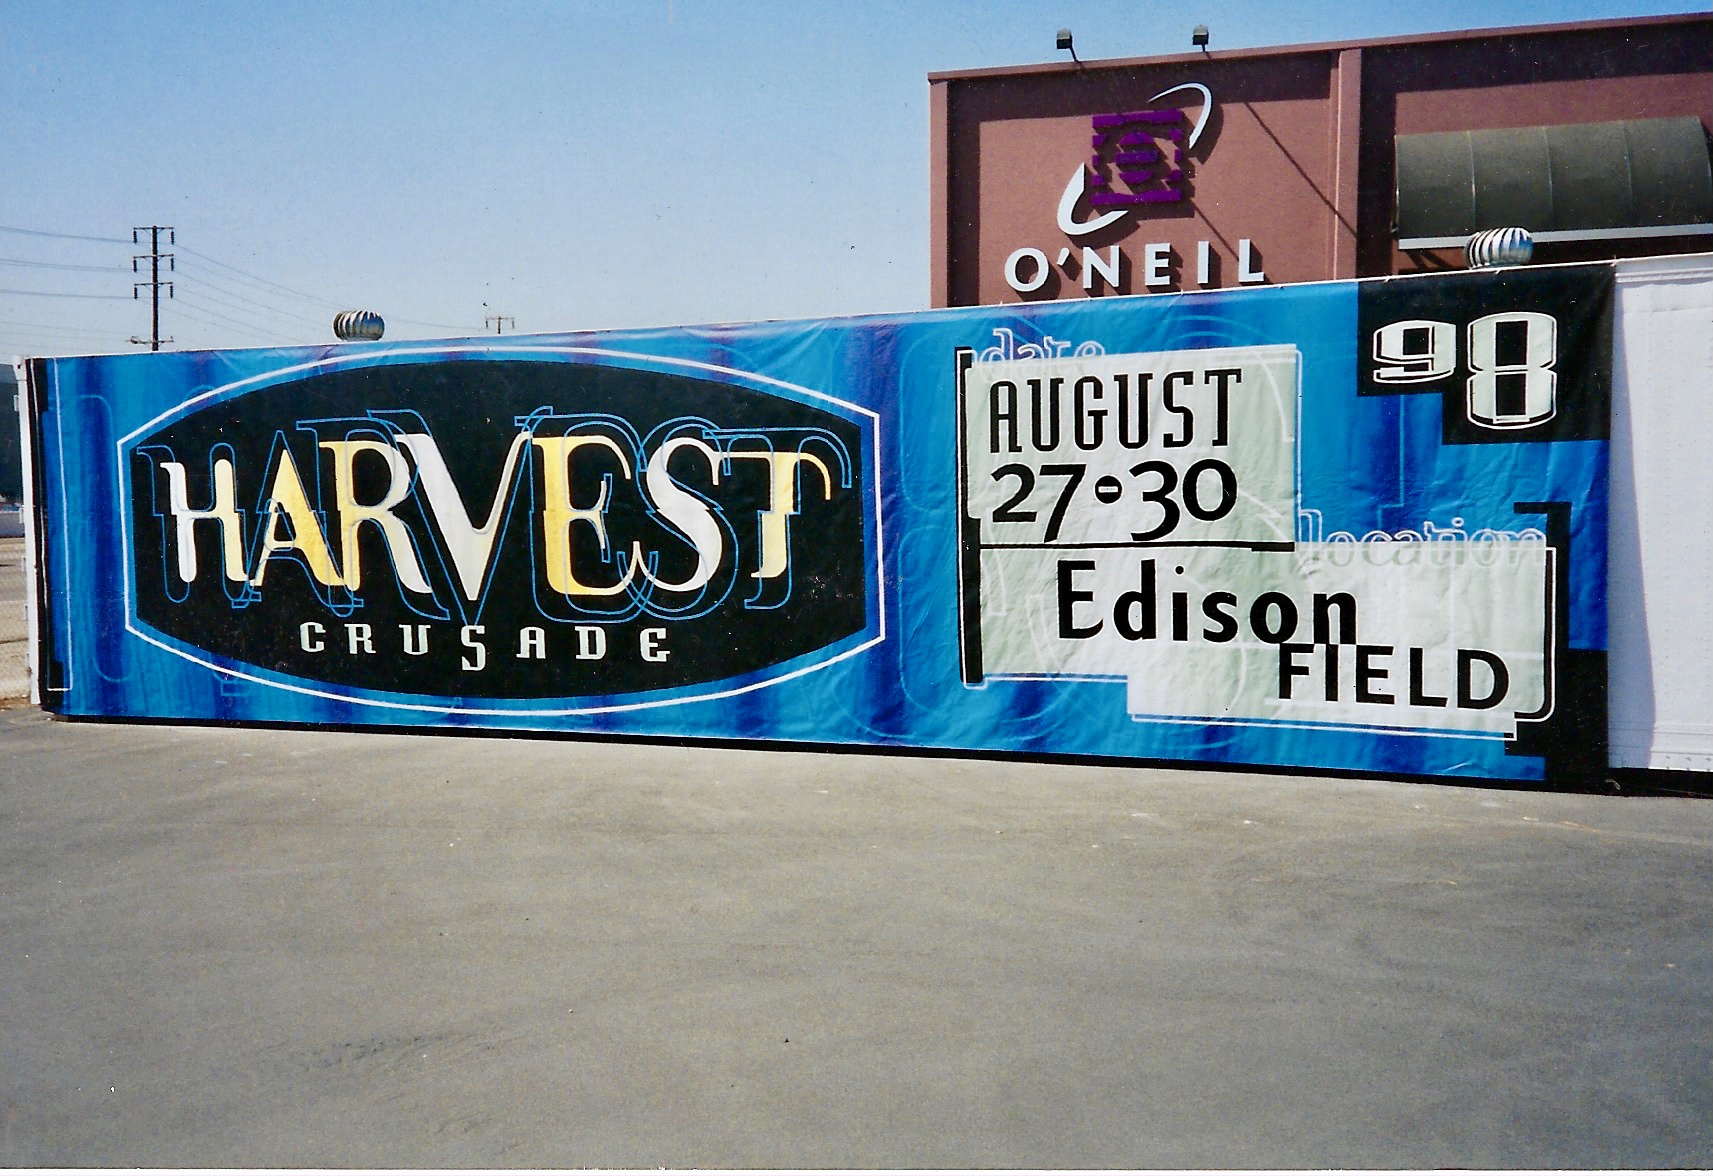 Harvest Crusade freeway custom advertising banner 1998 - hand painted banner